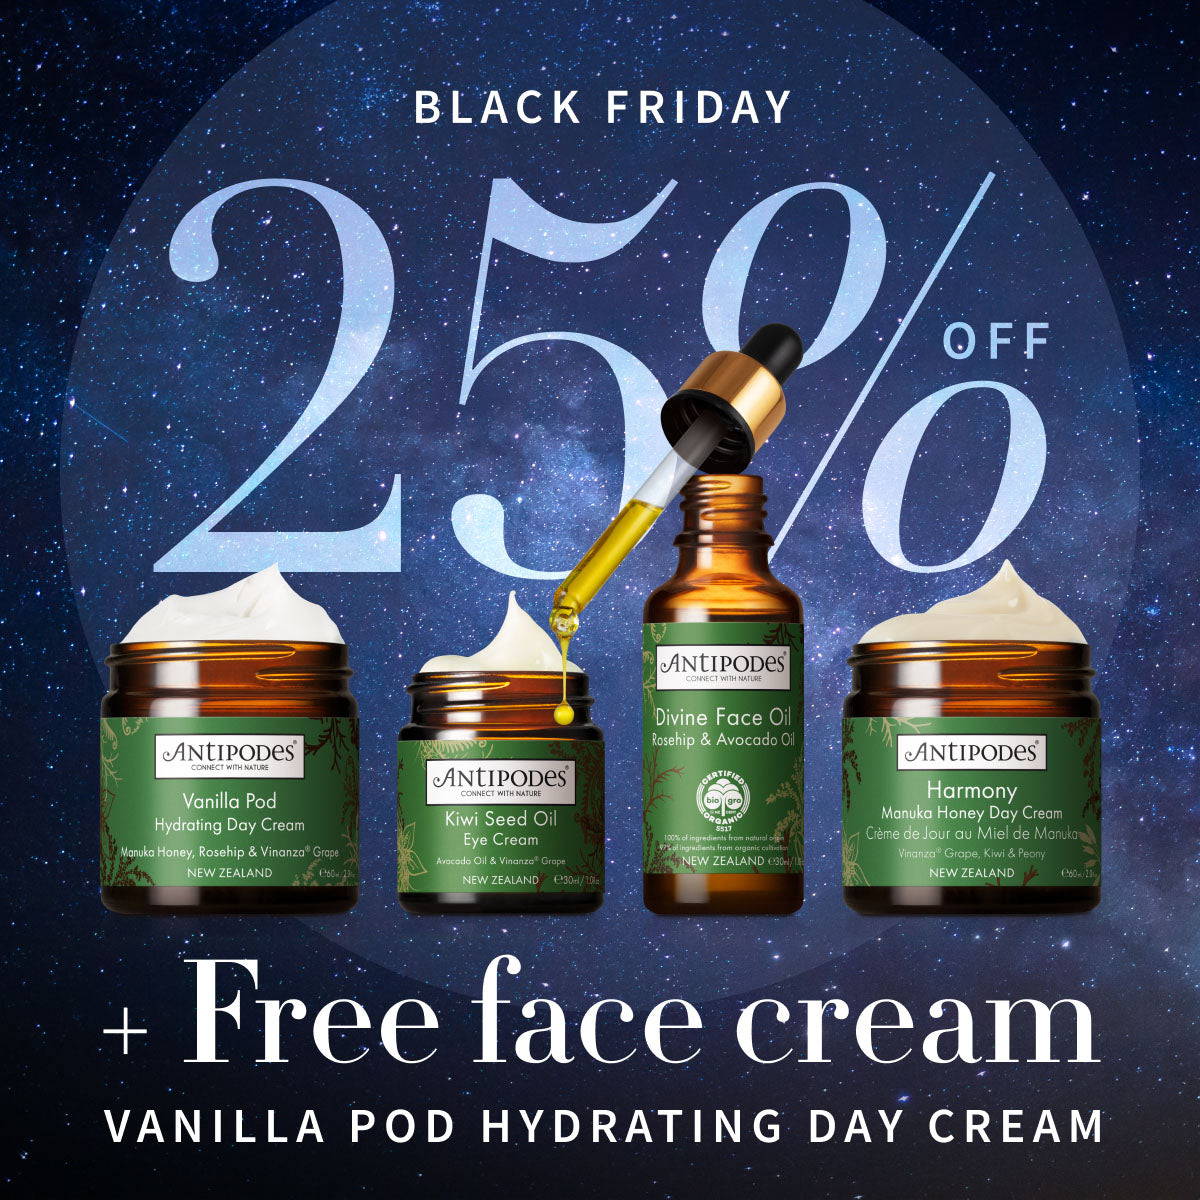 25% off sitewide plus free vanilla pod hydrating day cream